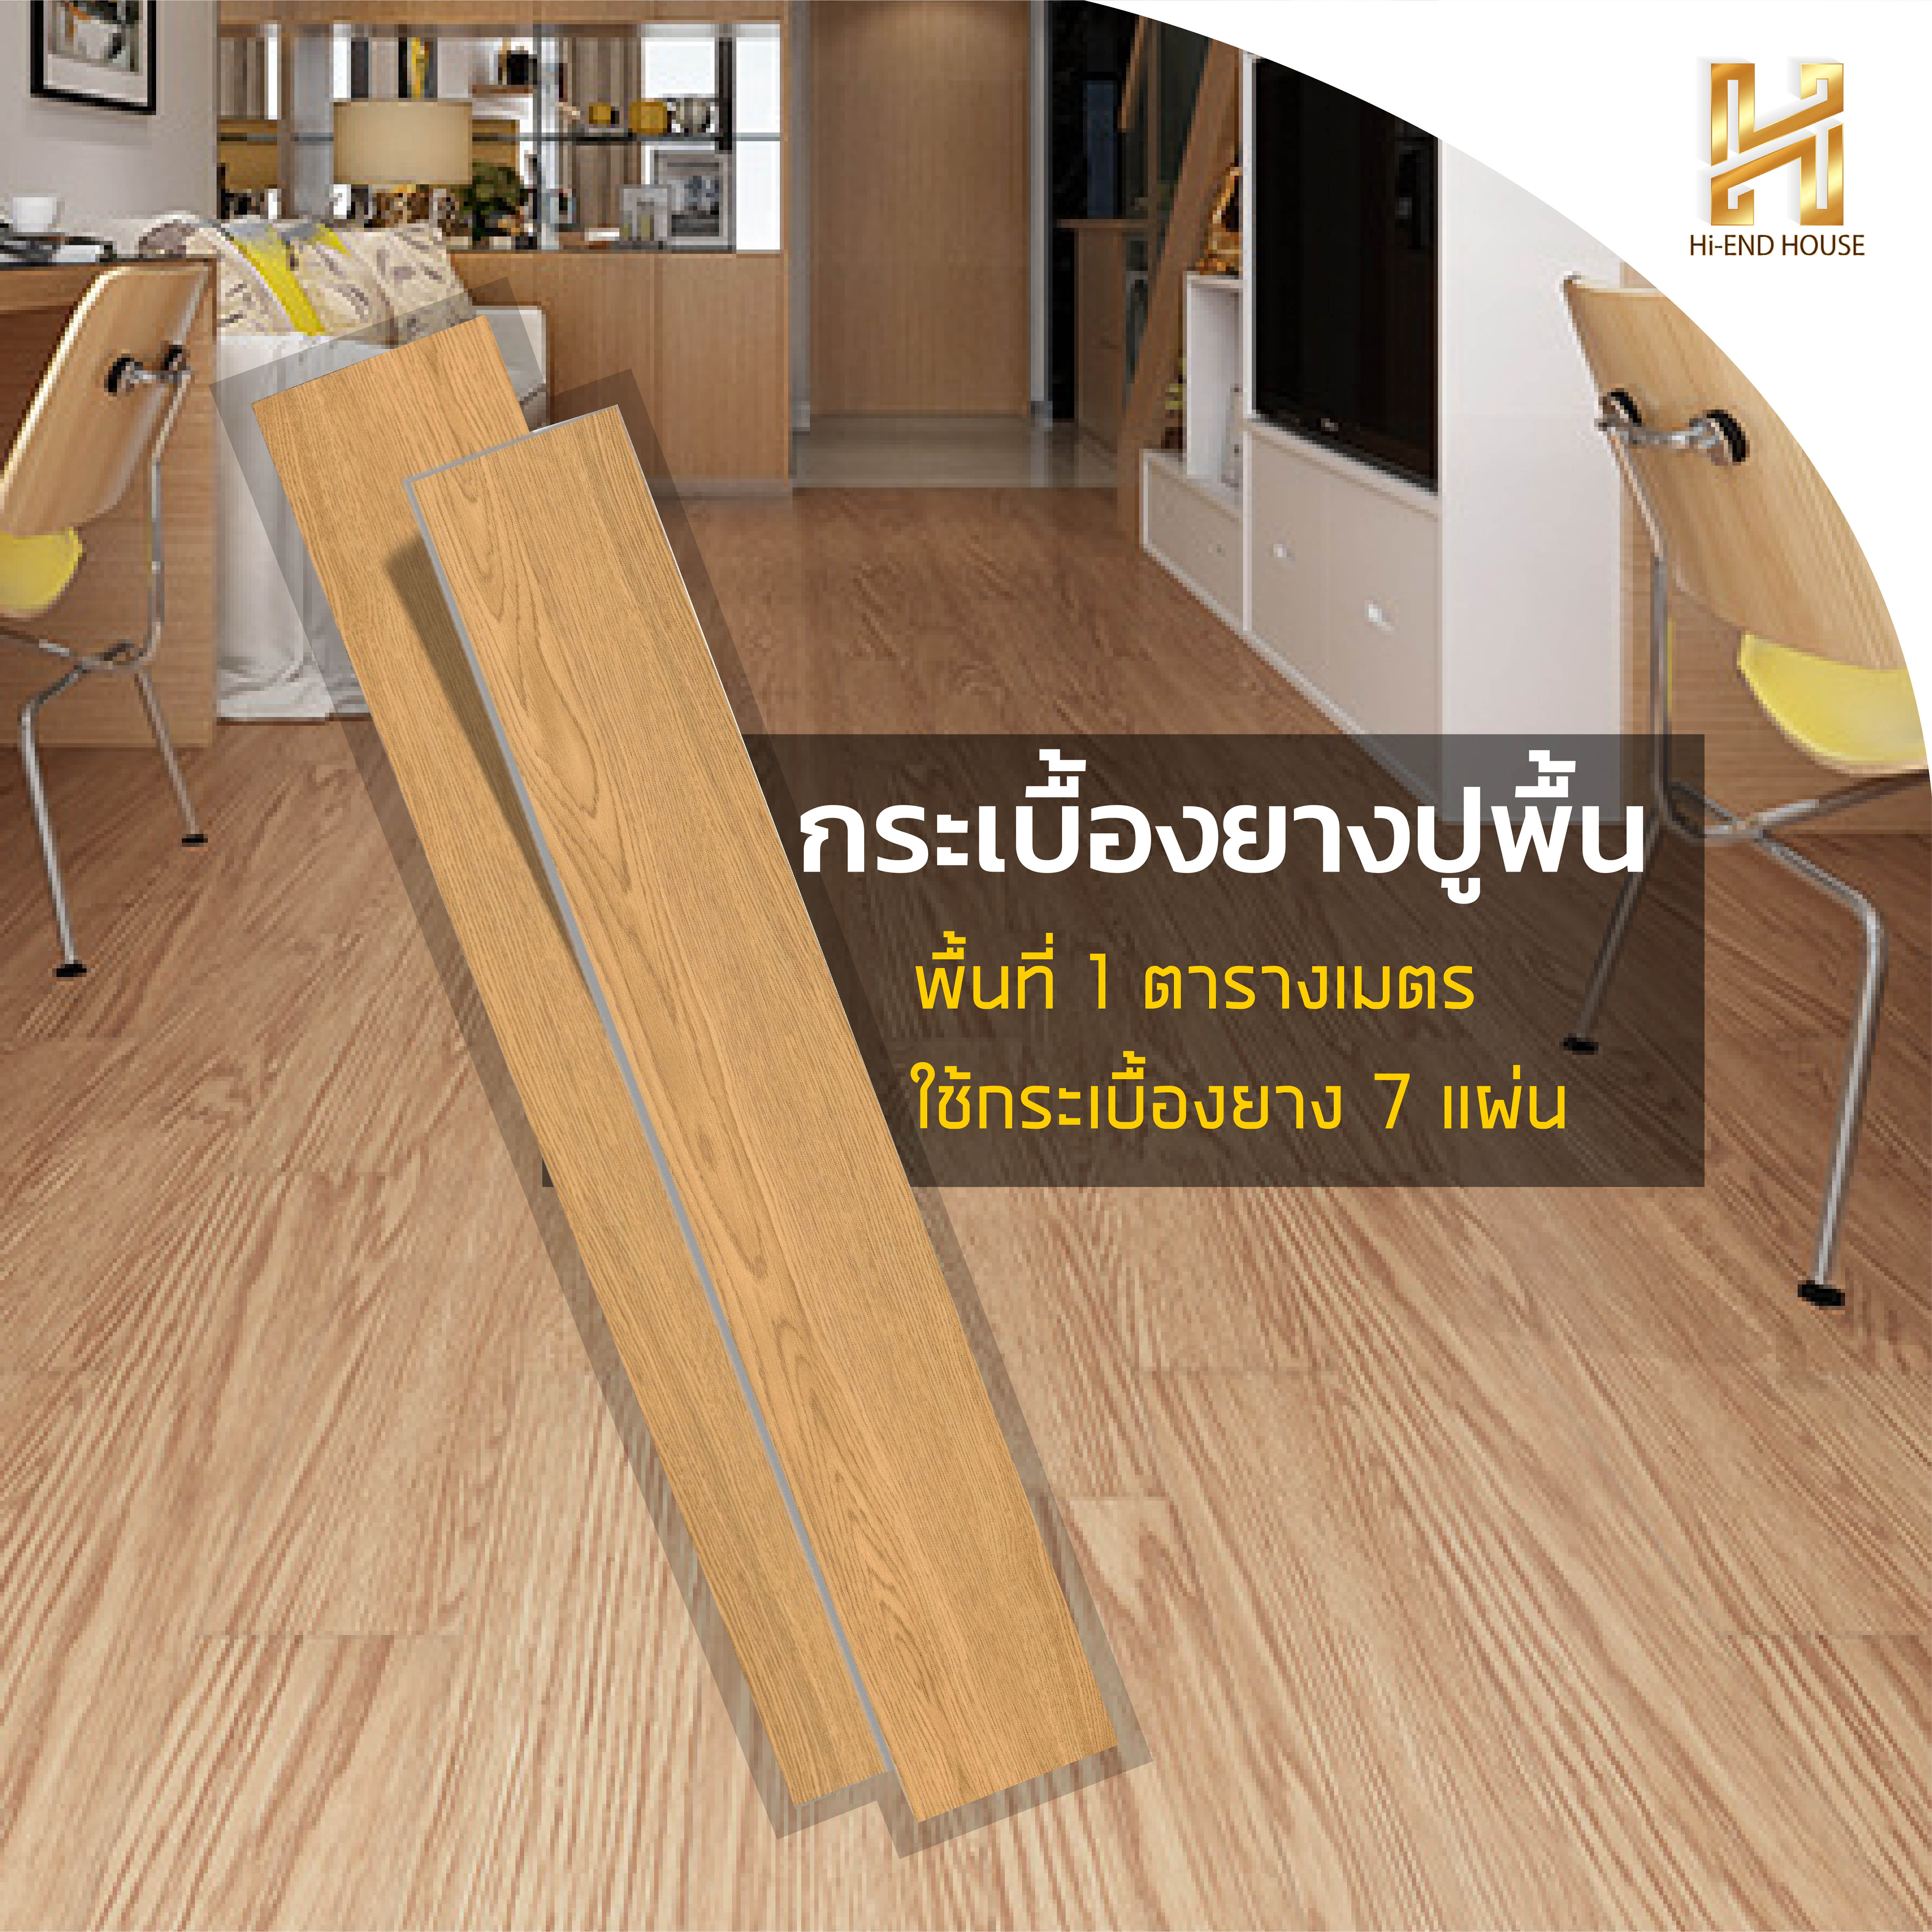 From Thailandกระเบื้องยางลายไม้เหลืองกาวในตัว 1 ตารางเมตร ยาว91.4x15.2 cm หนา 1.8 มม. พื้นกระเบื้องยาง พื้น PVC สินค้าจริงสีอ่อนกว่าในรูป